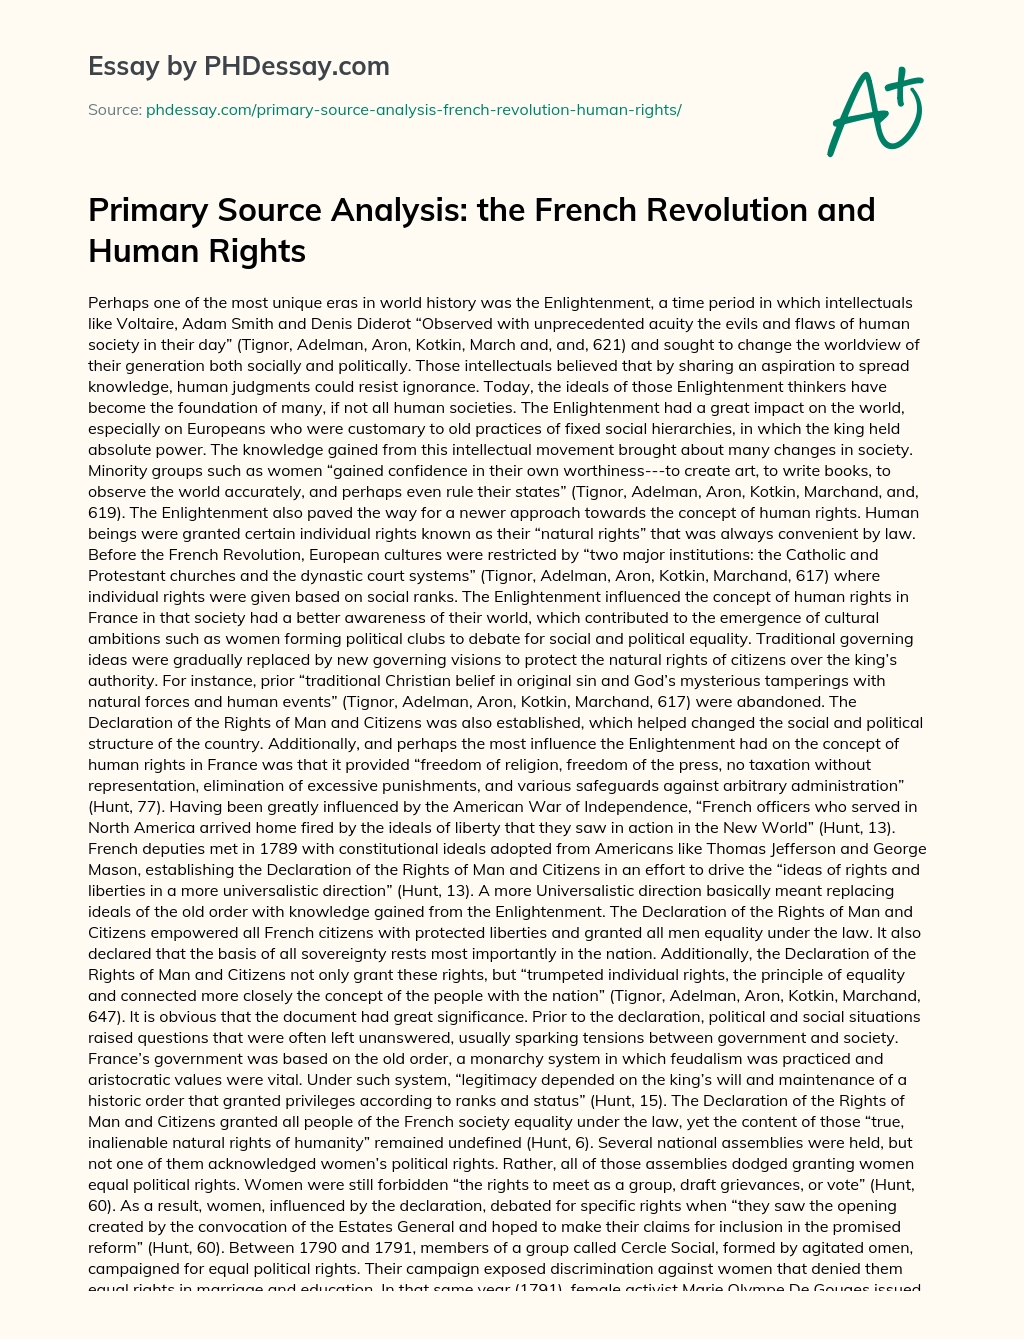 primary source analysis essay